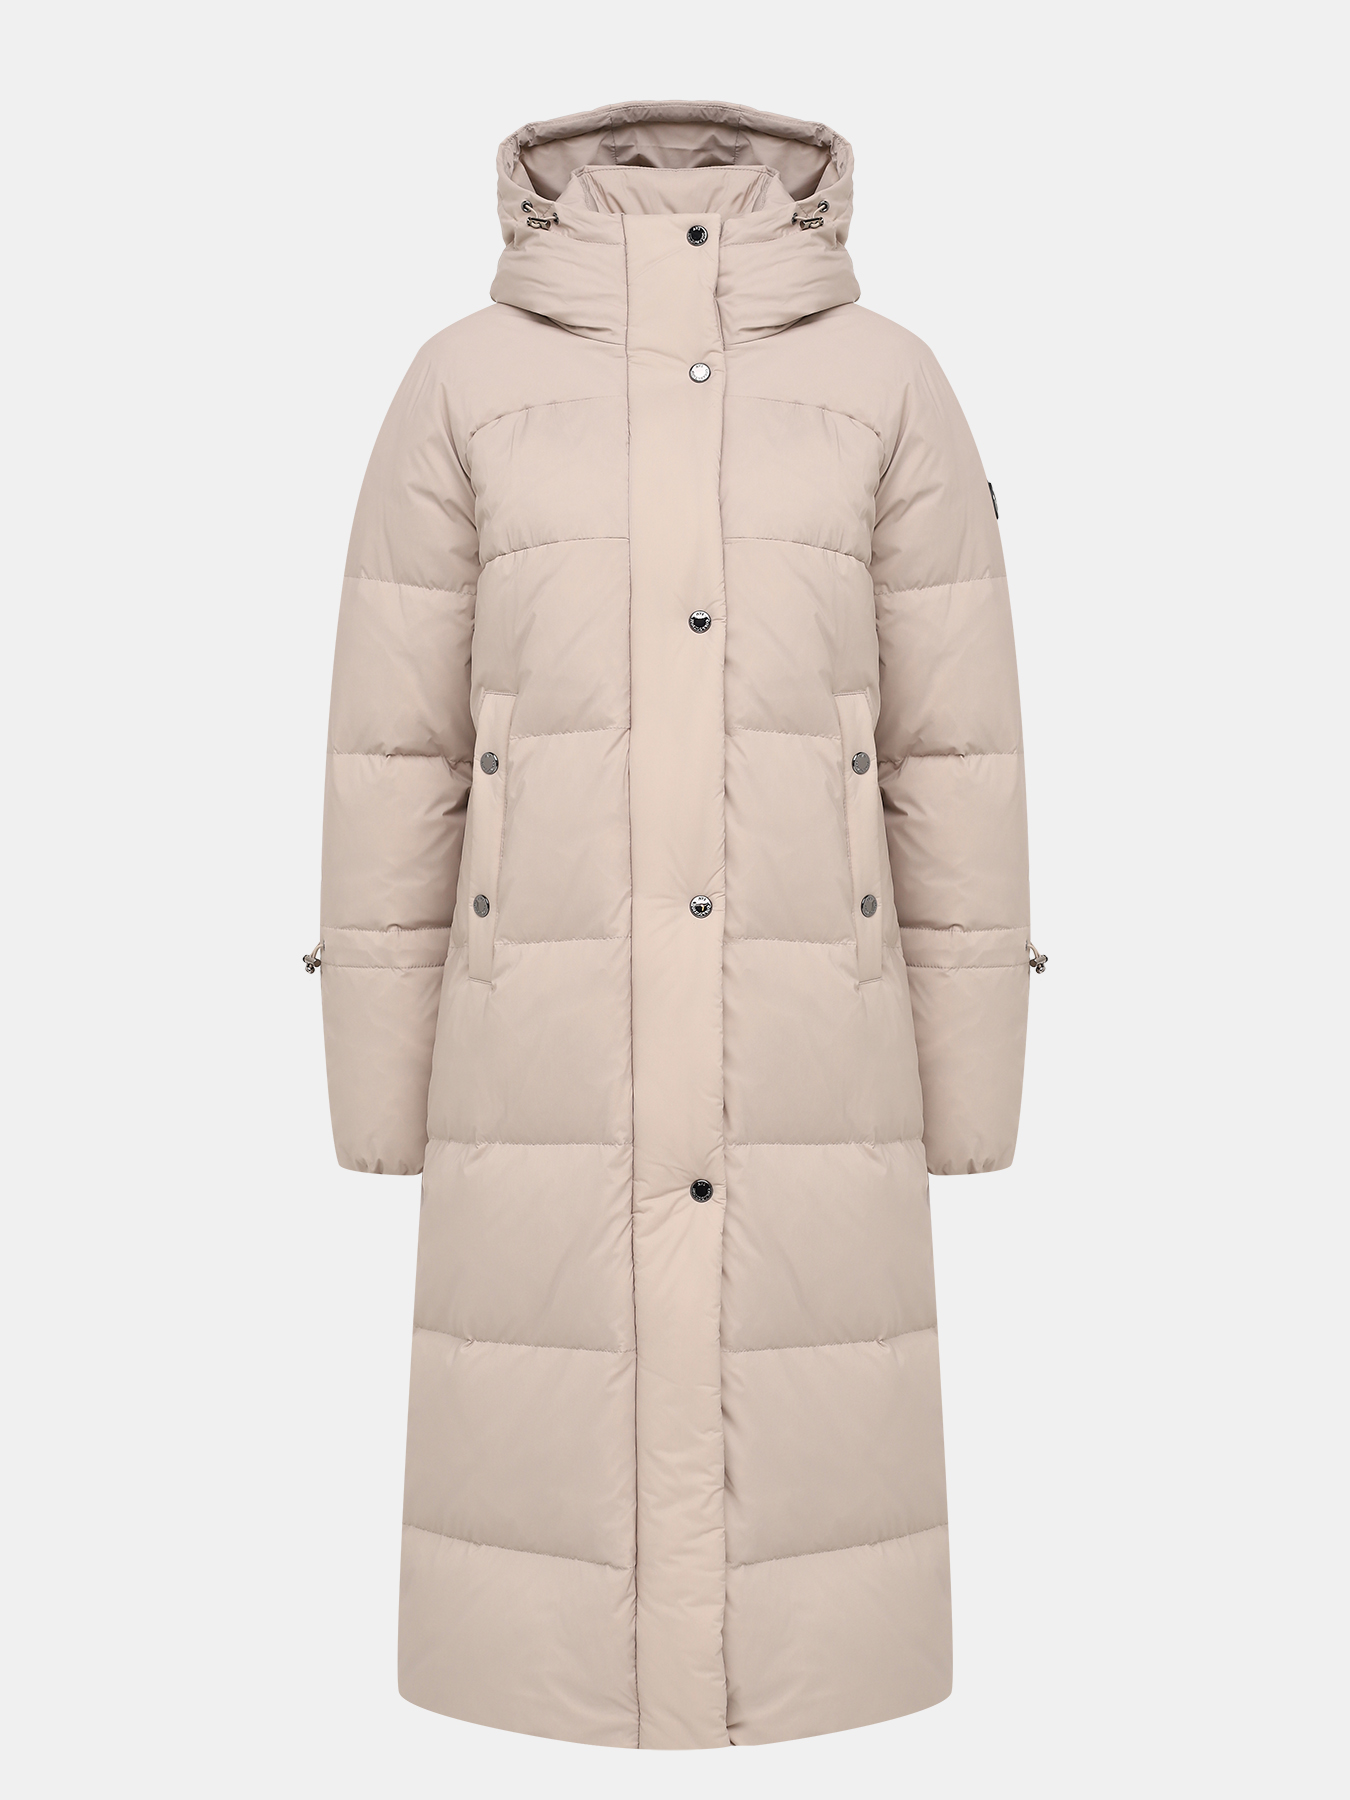 Пальто зимнее AVI 433604-026, цвет бежевый, размер 50 - фото 1